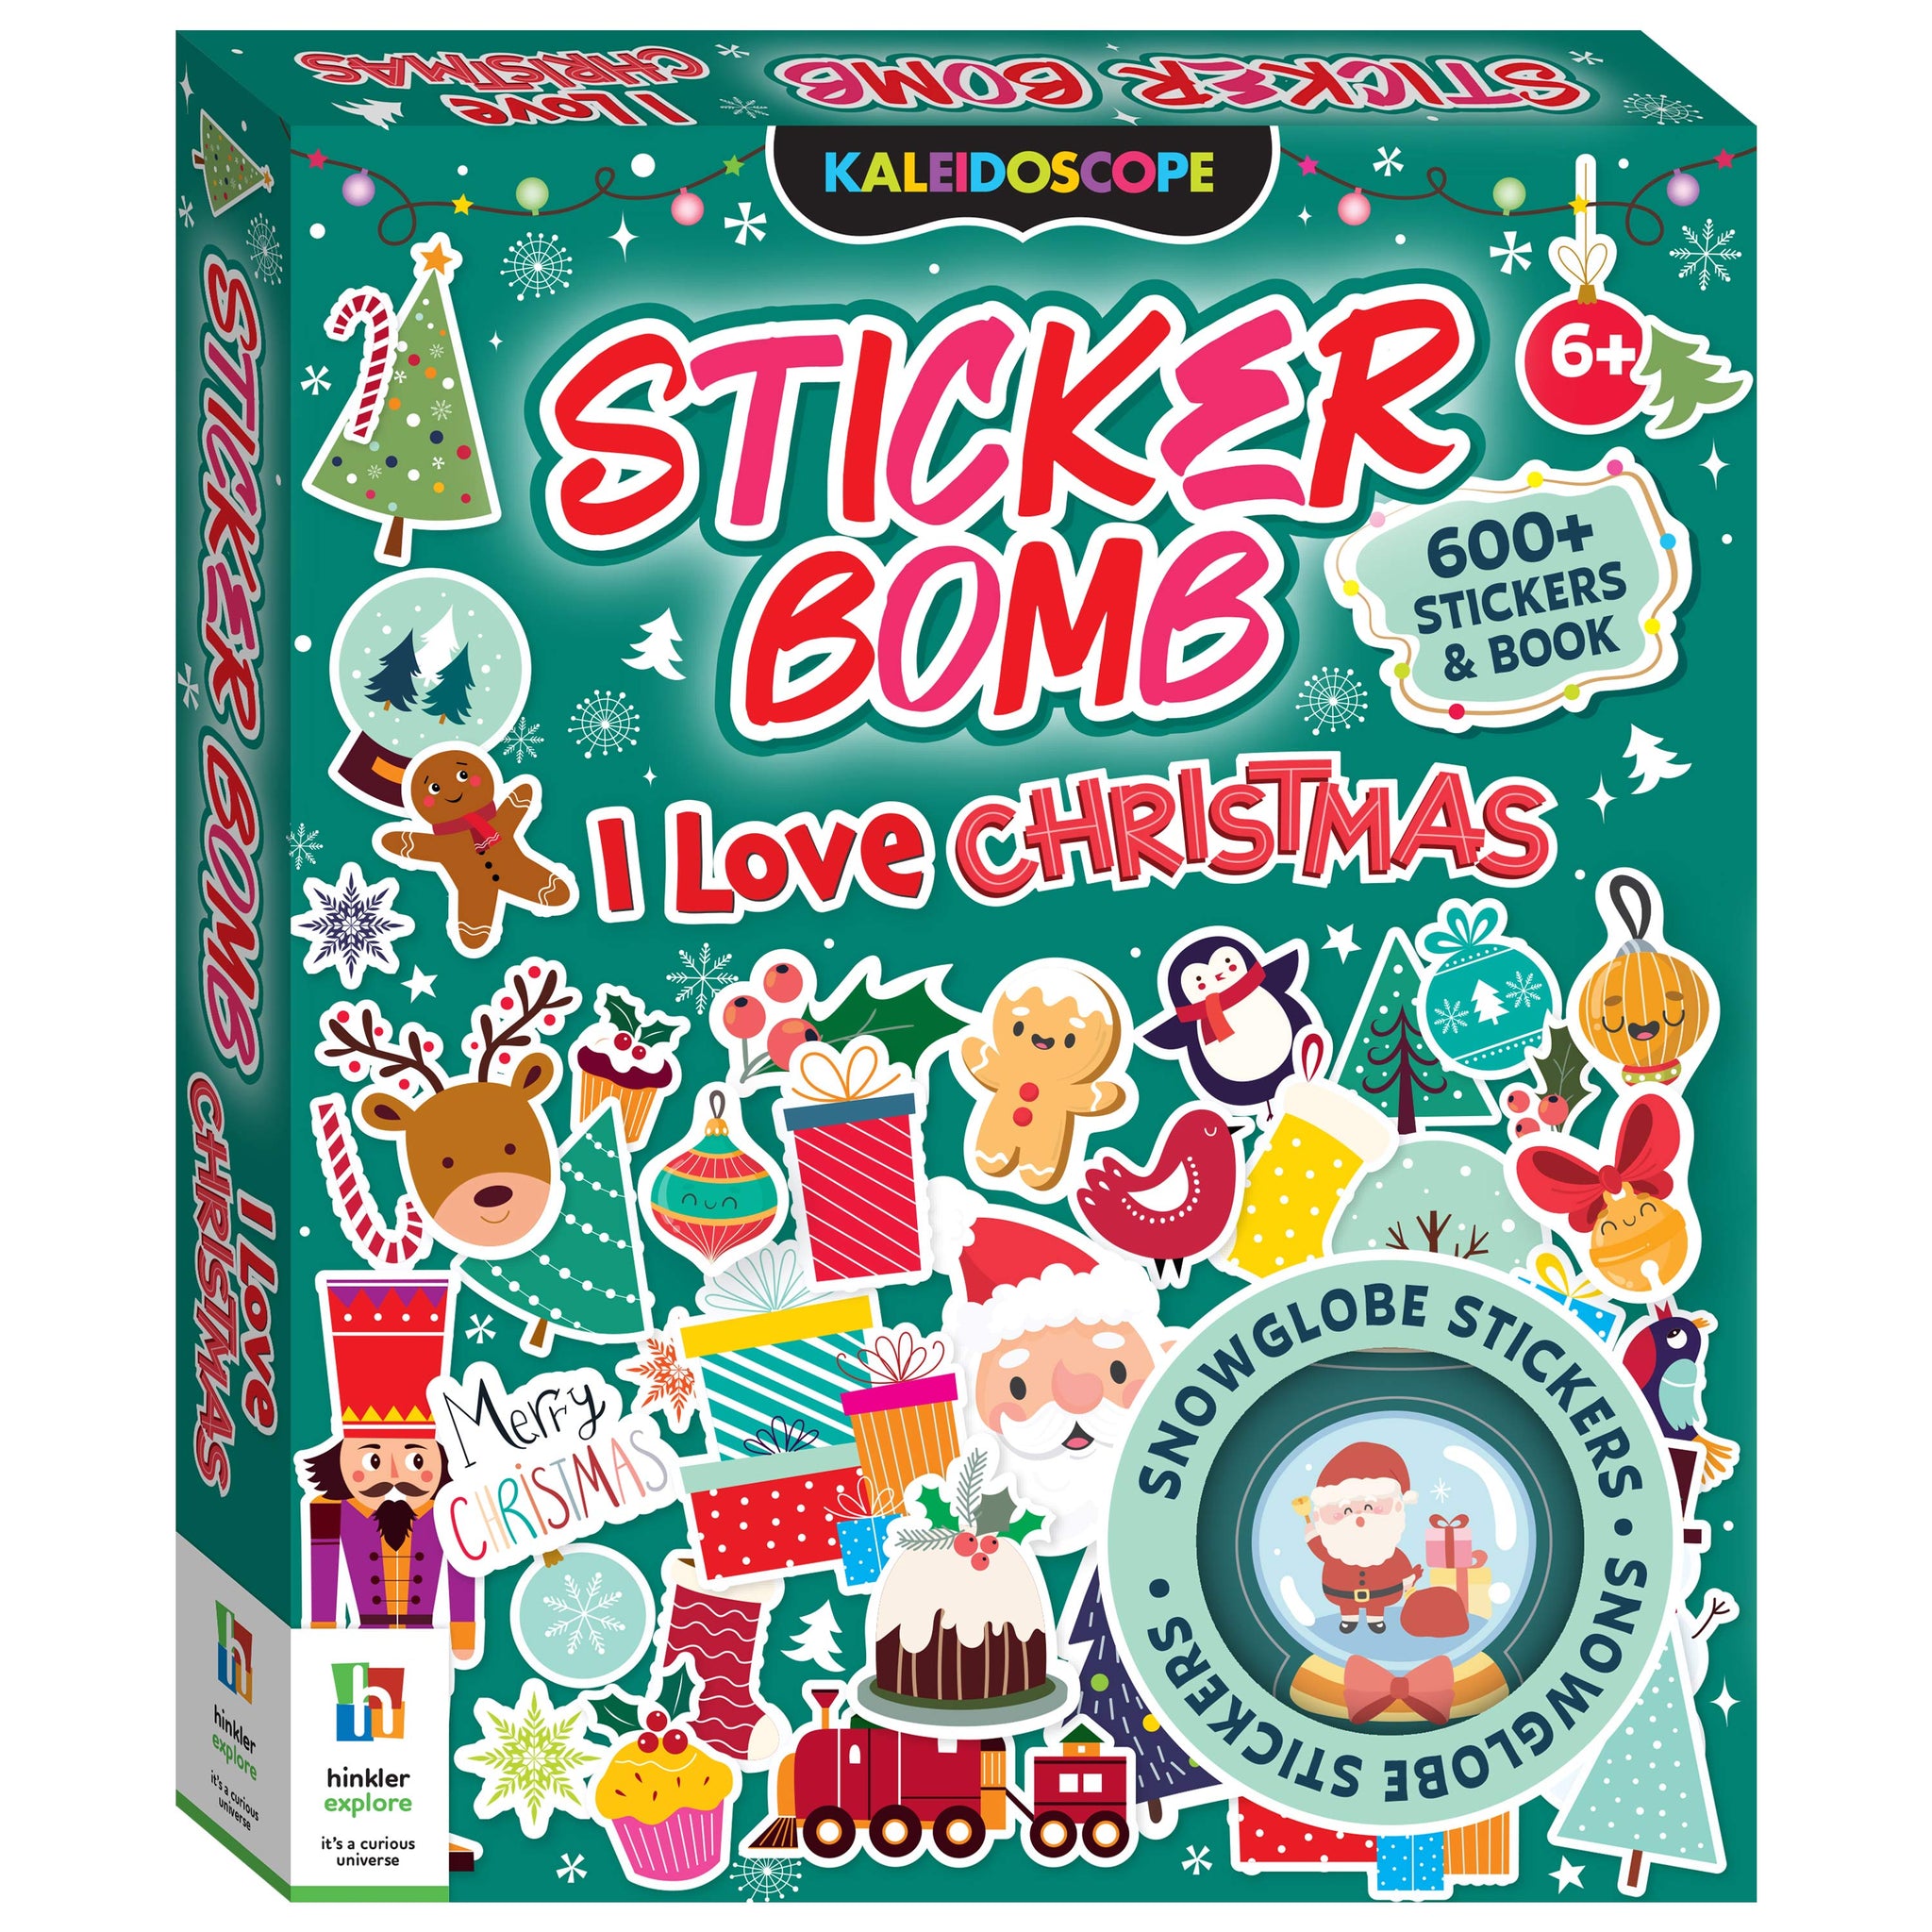 Kaleidoscope Sticker Bomb I Love Christmas!